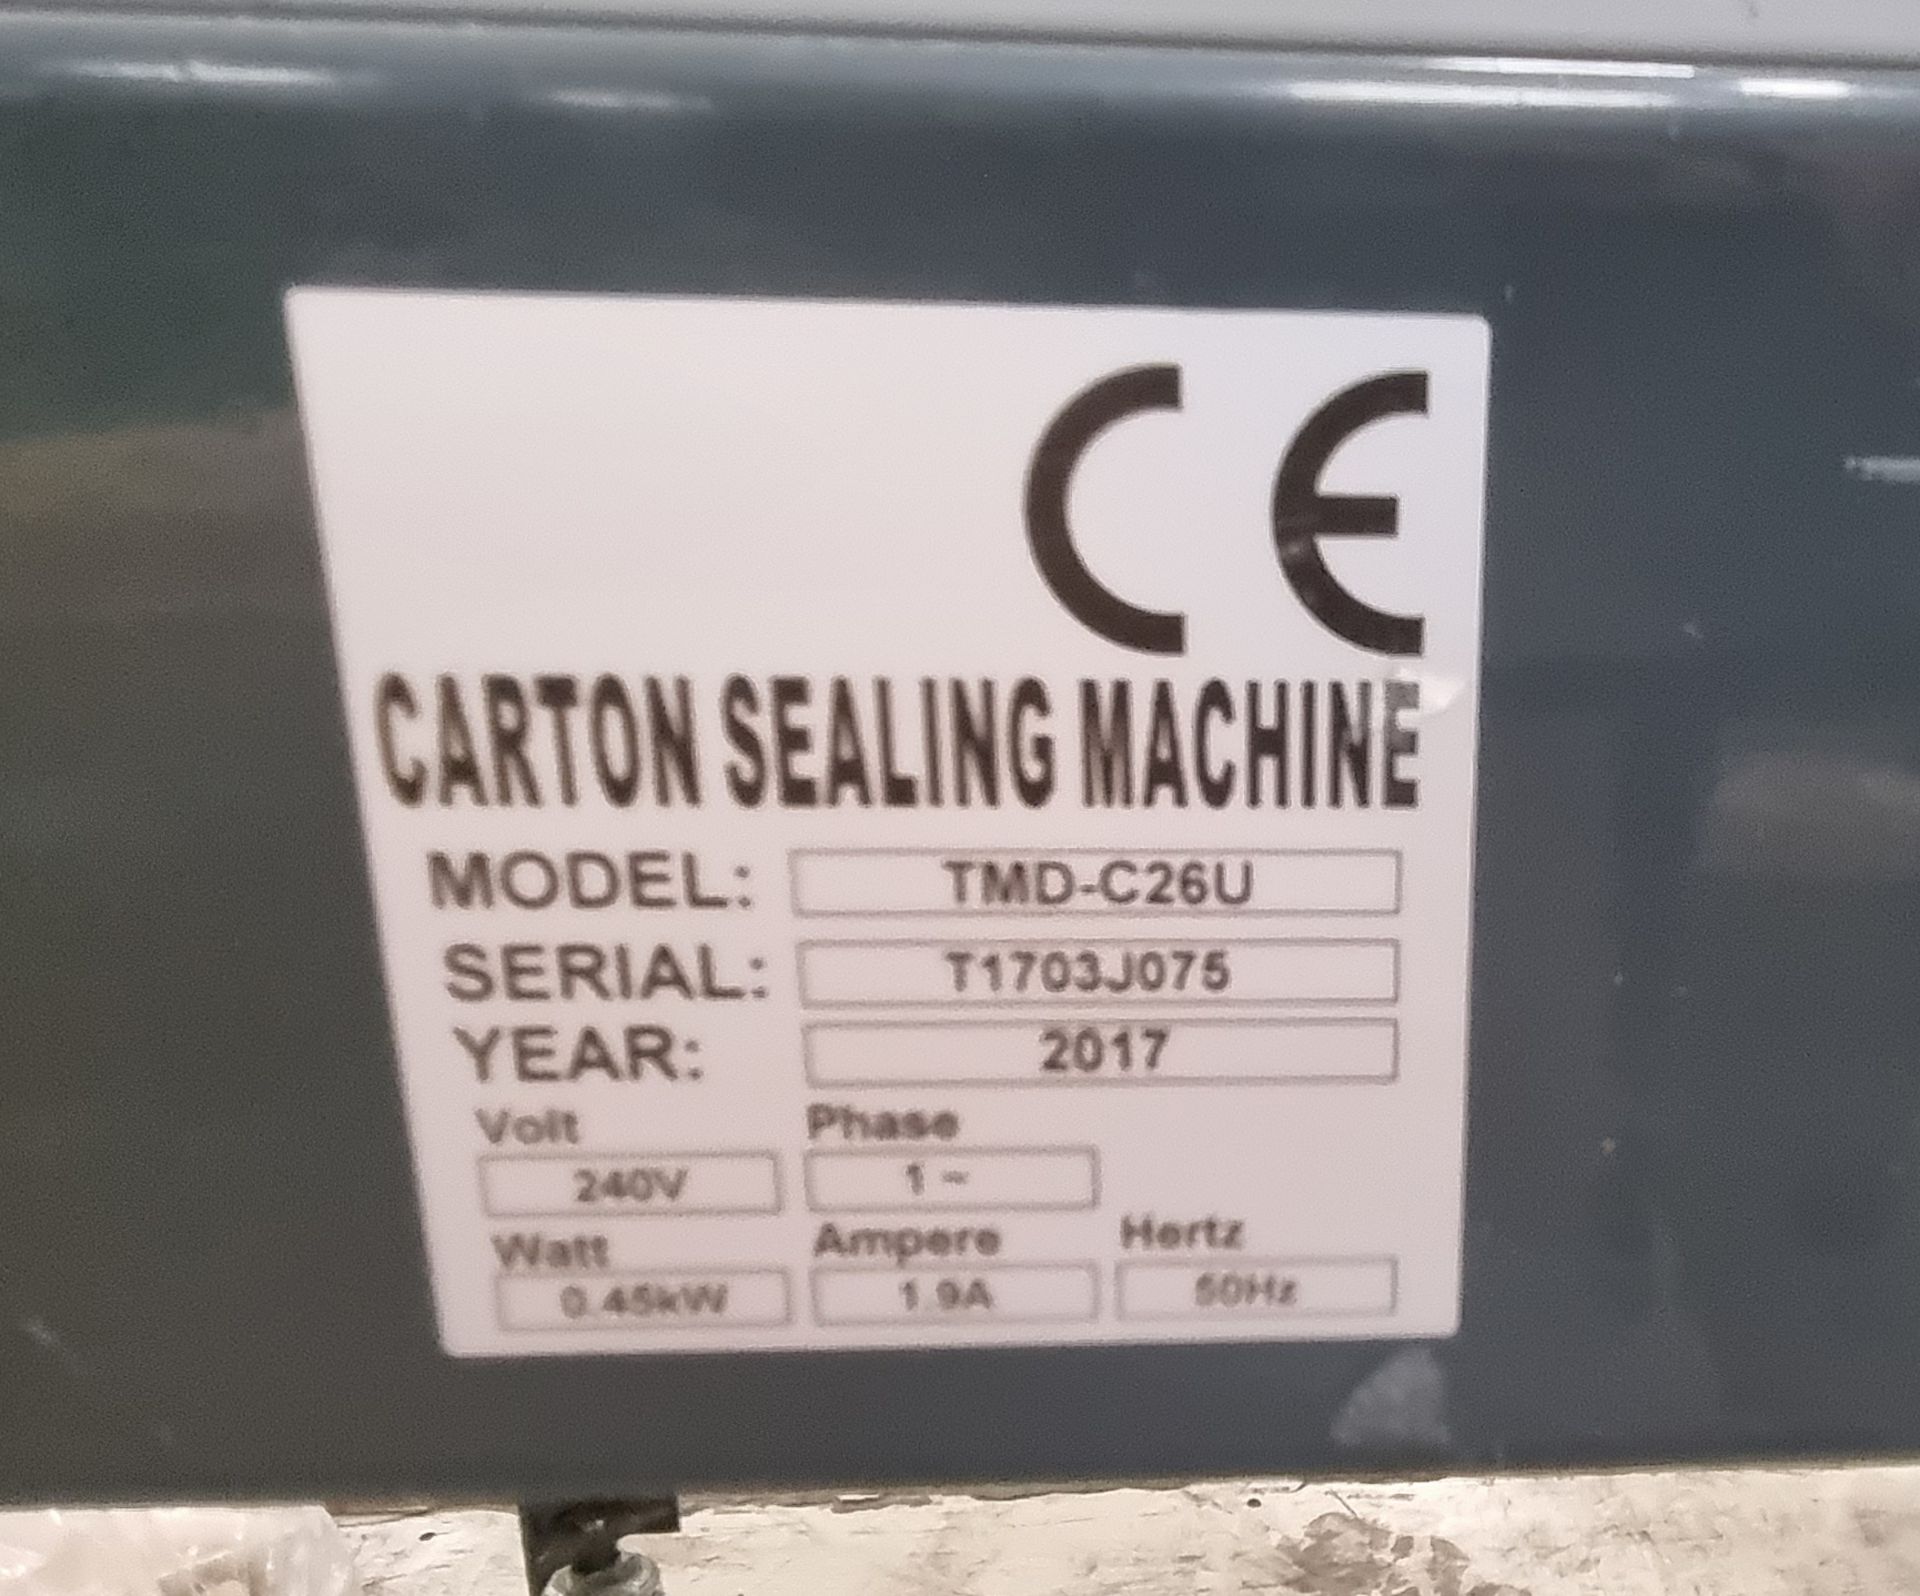 Extend TMD-C26U carton sealing machine - 2017 - serial T1703J075 - 1ph - 240v - 0.45kW - 50Hz - Image 8 of 8